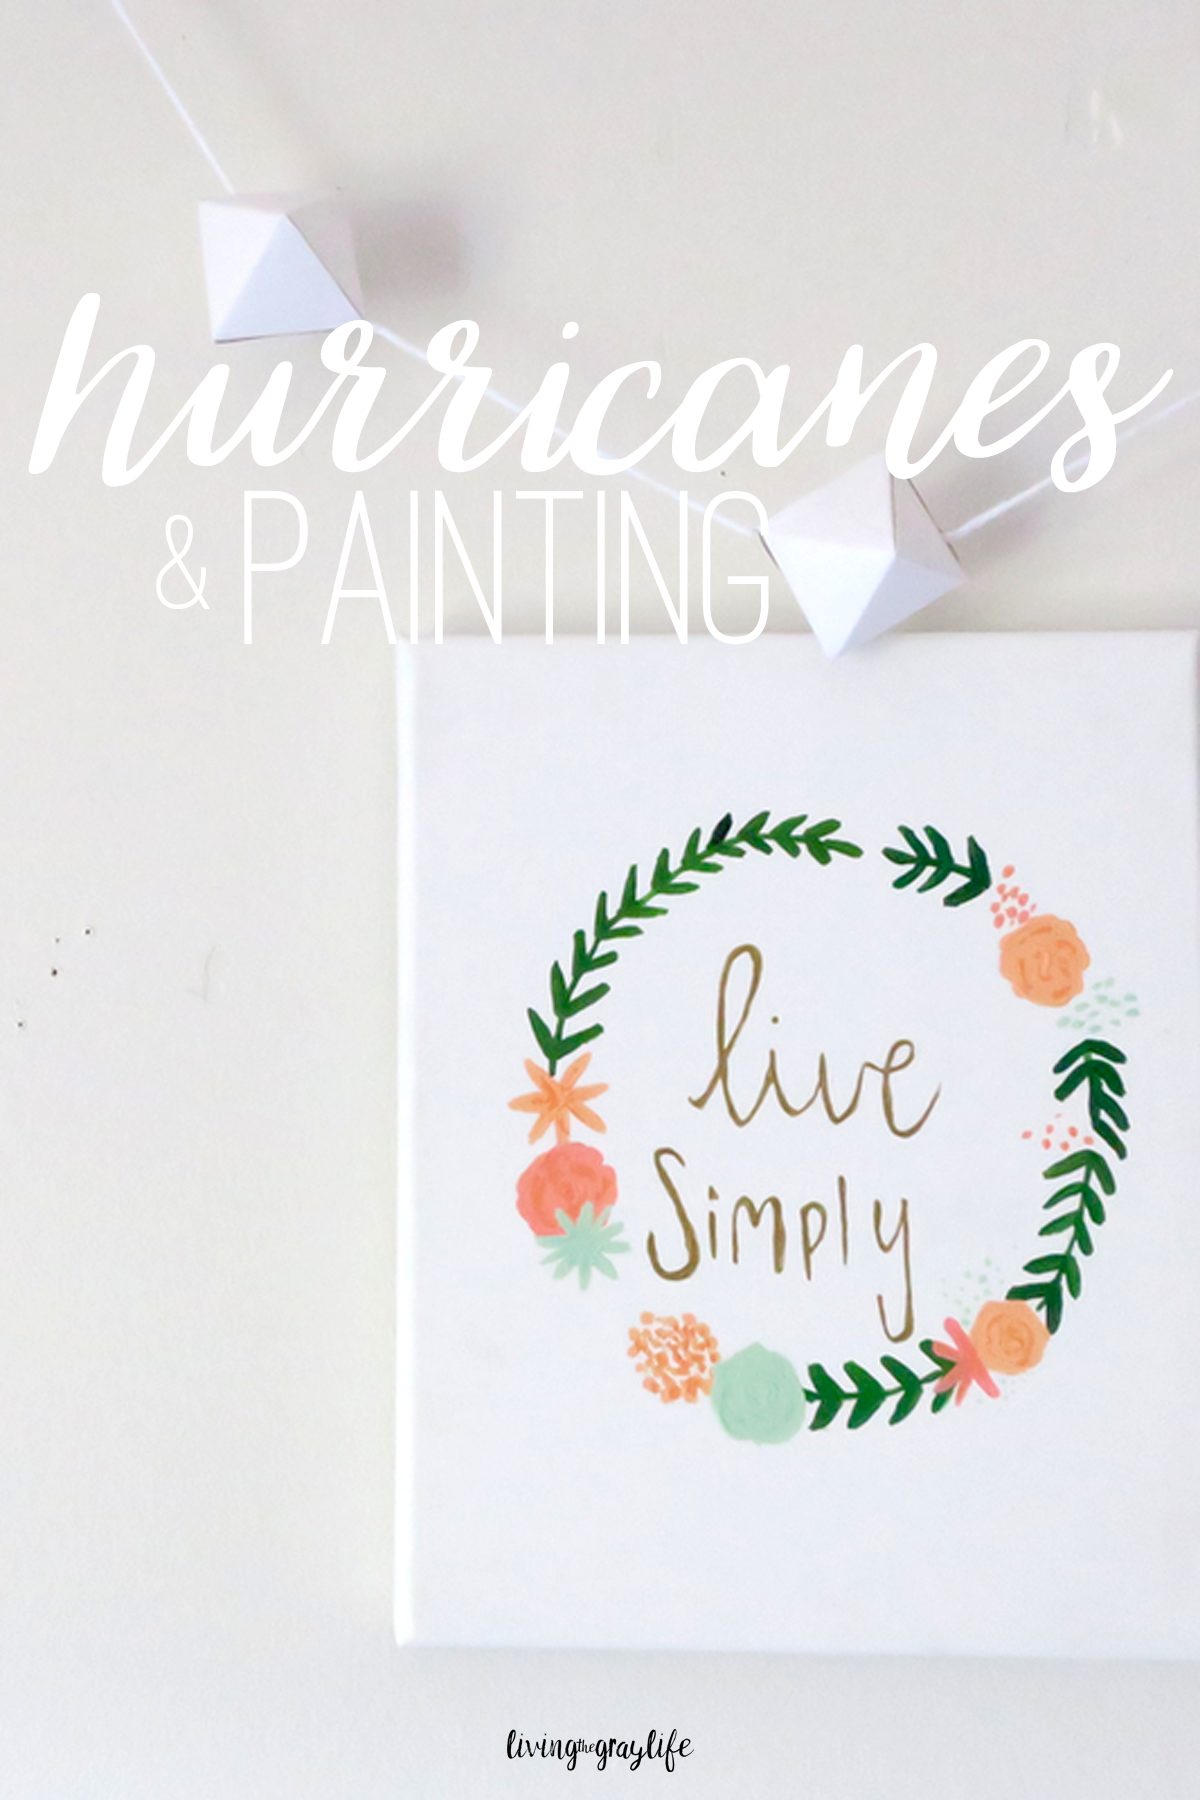 Hurricanes & Painting